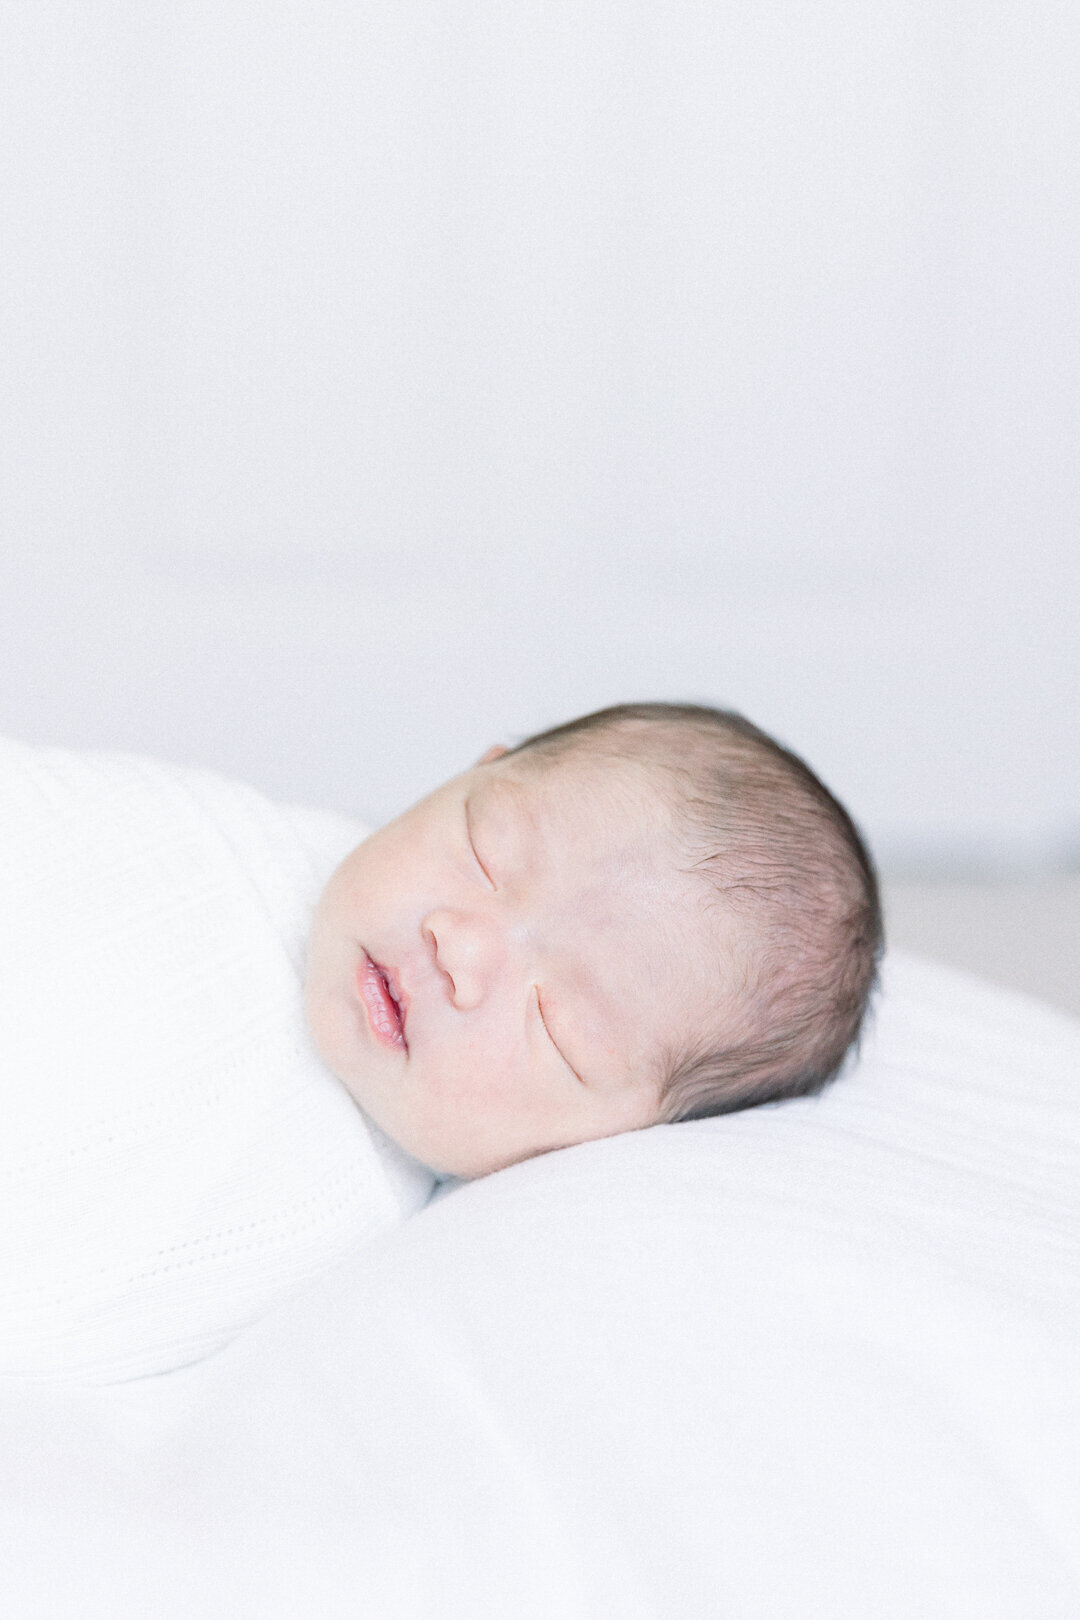 Image of sleeping baby taken by Sacramento Newborn Photographer Kelsey Krall